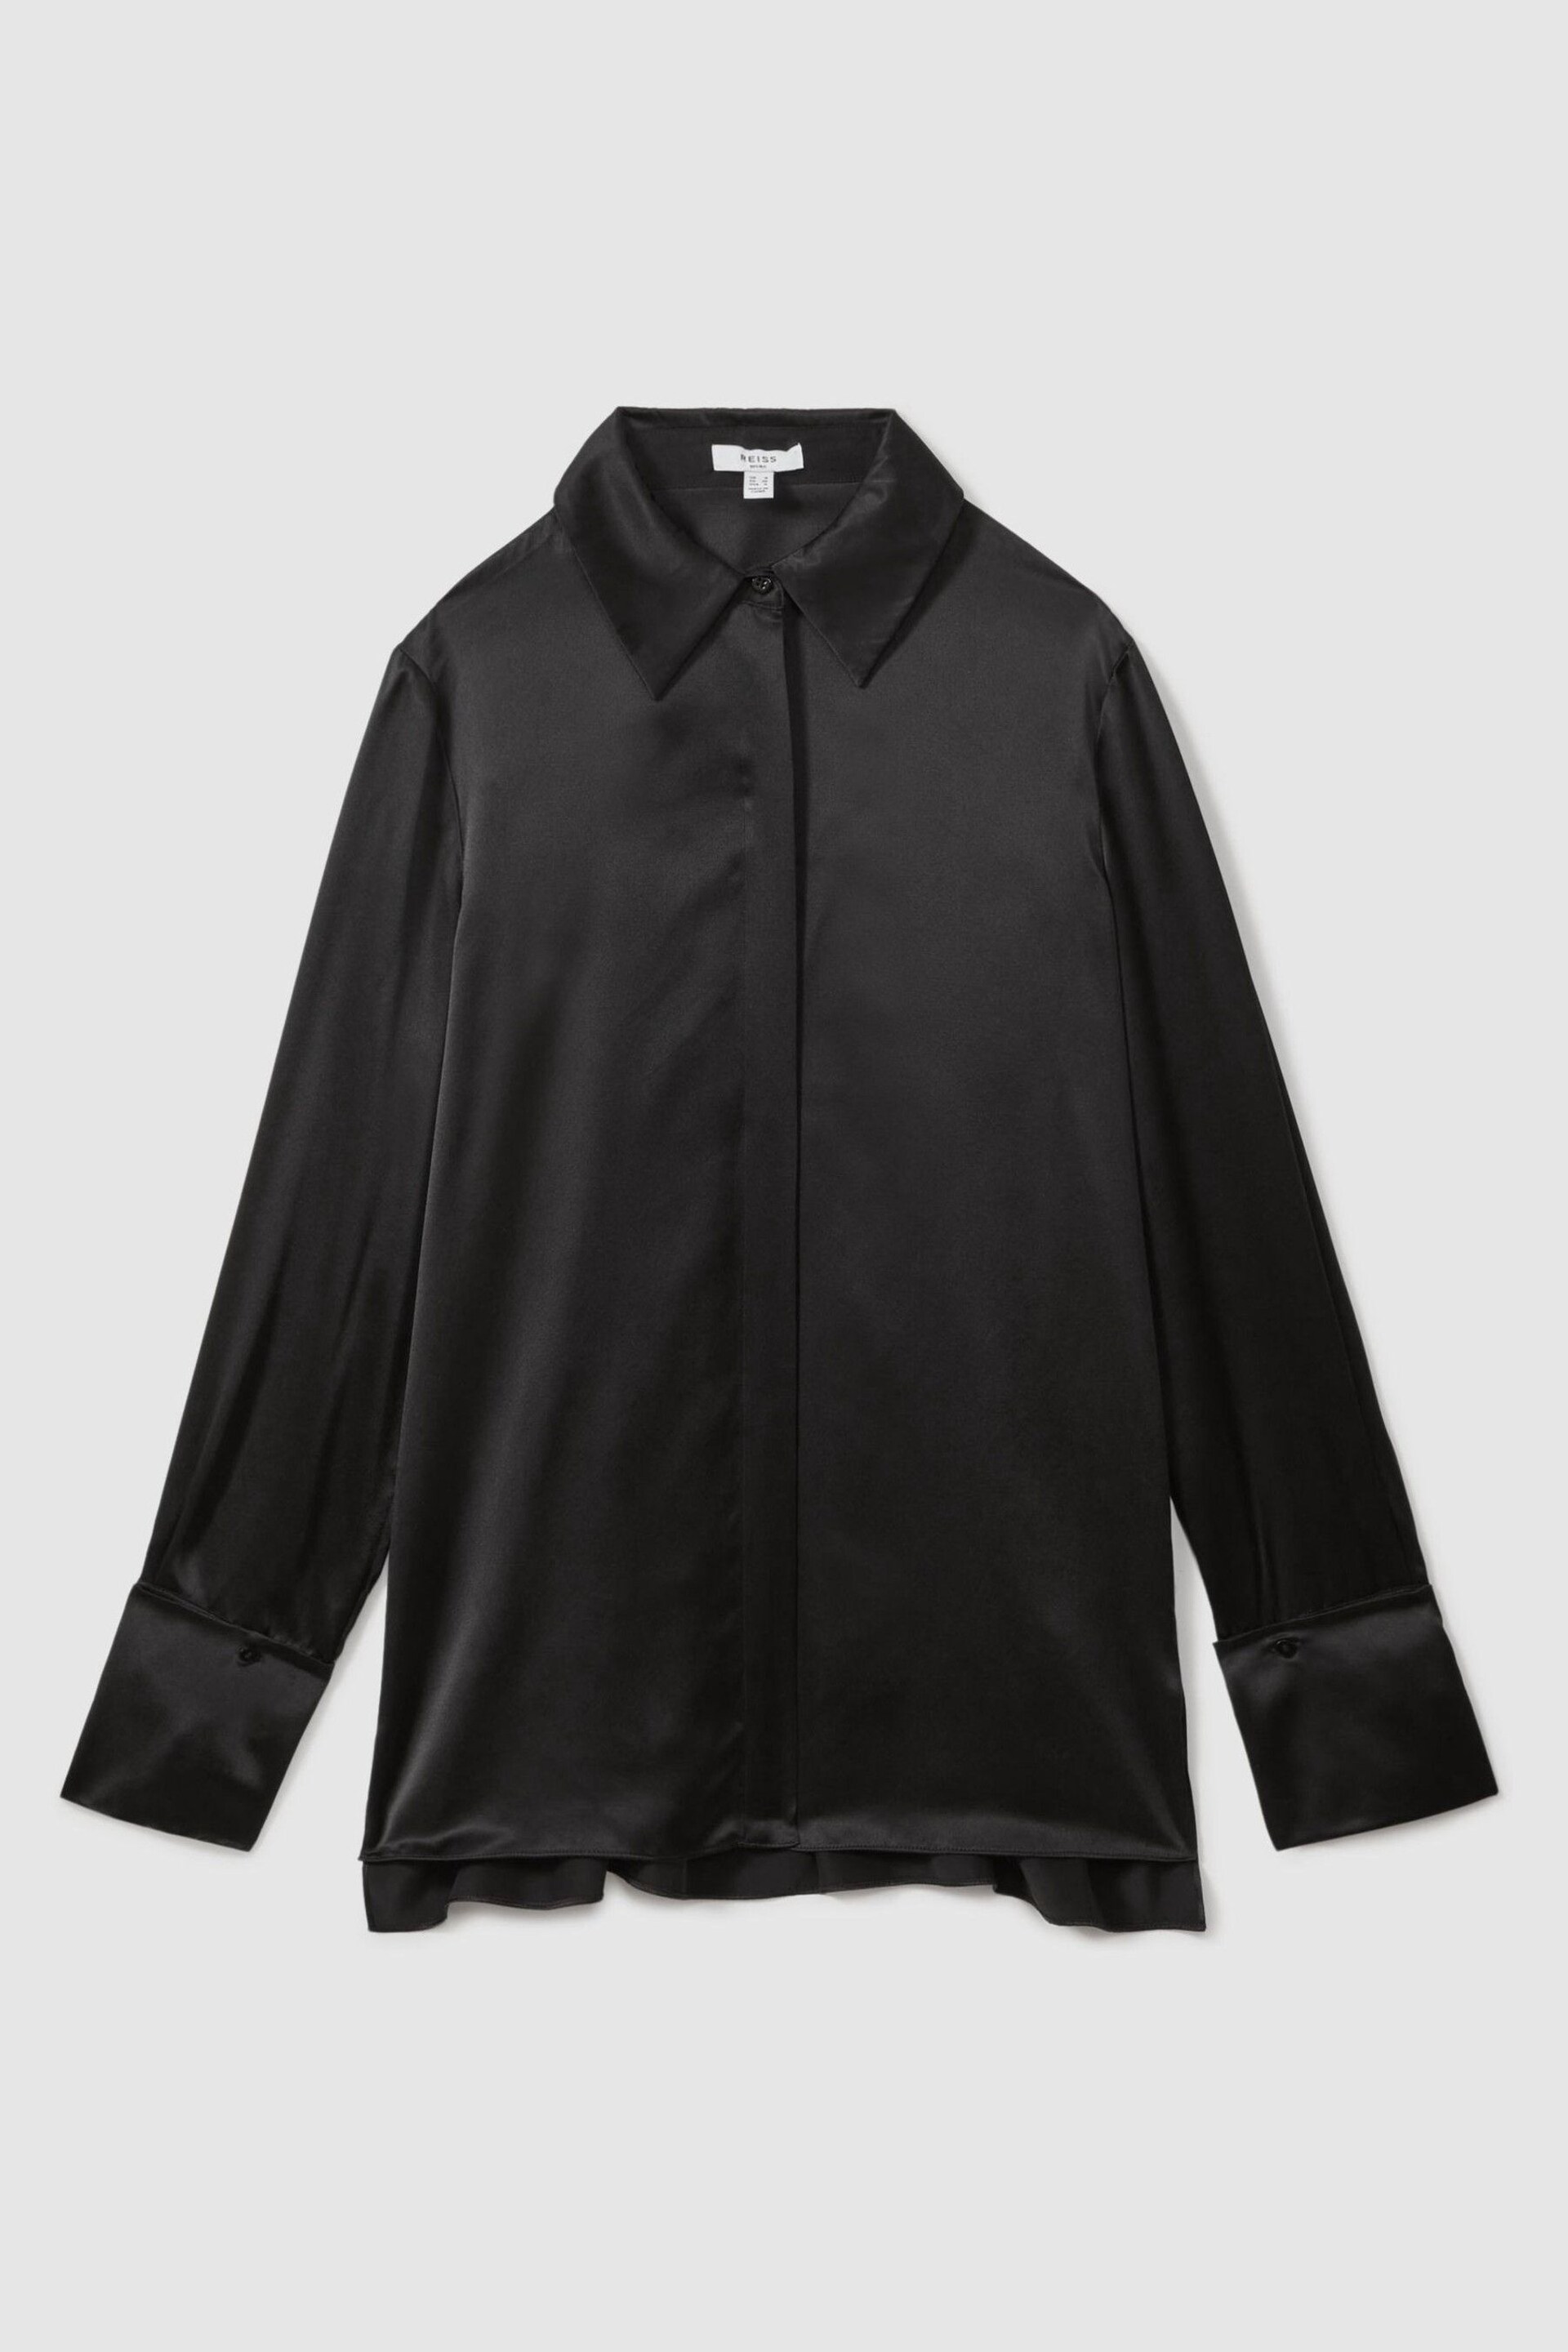 Reiss Black Hailey Petite Silk Shirt - Image 2 of 7